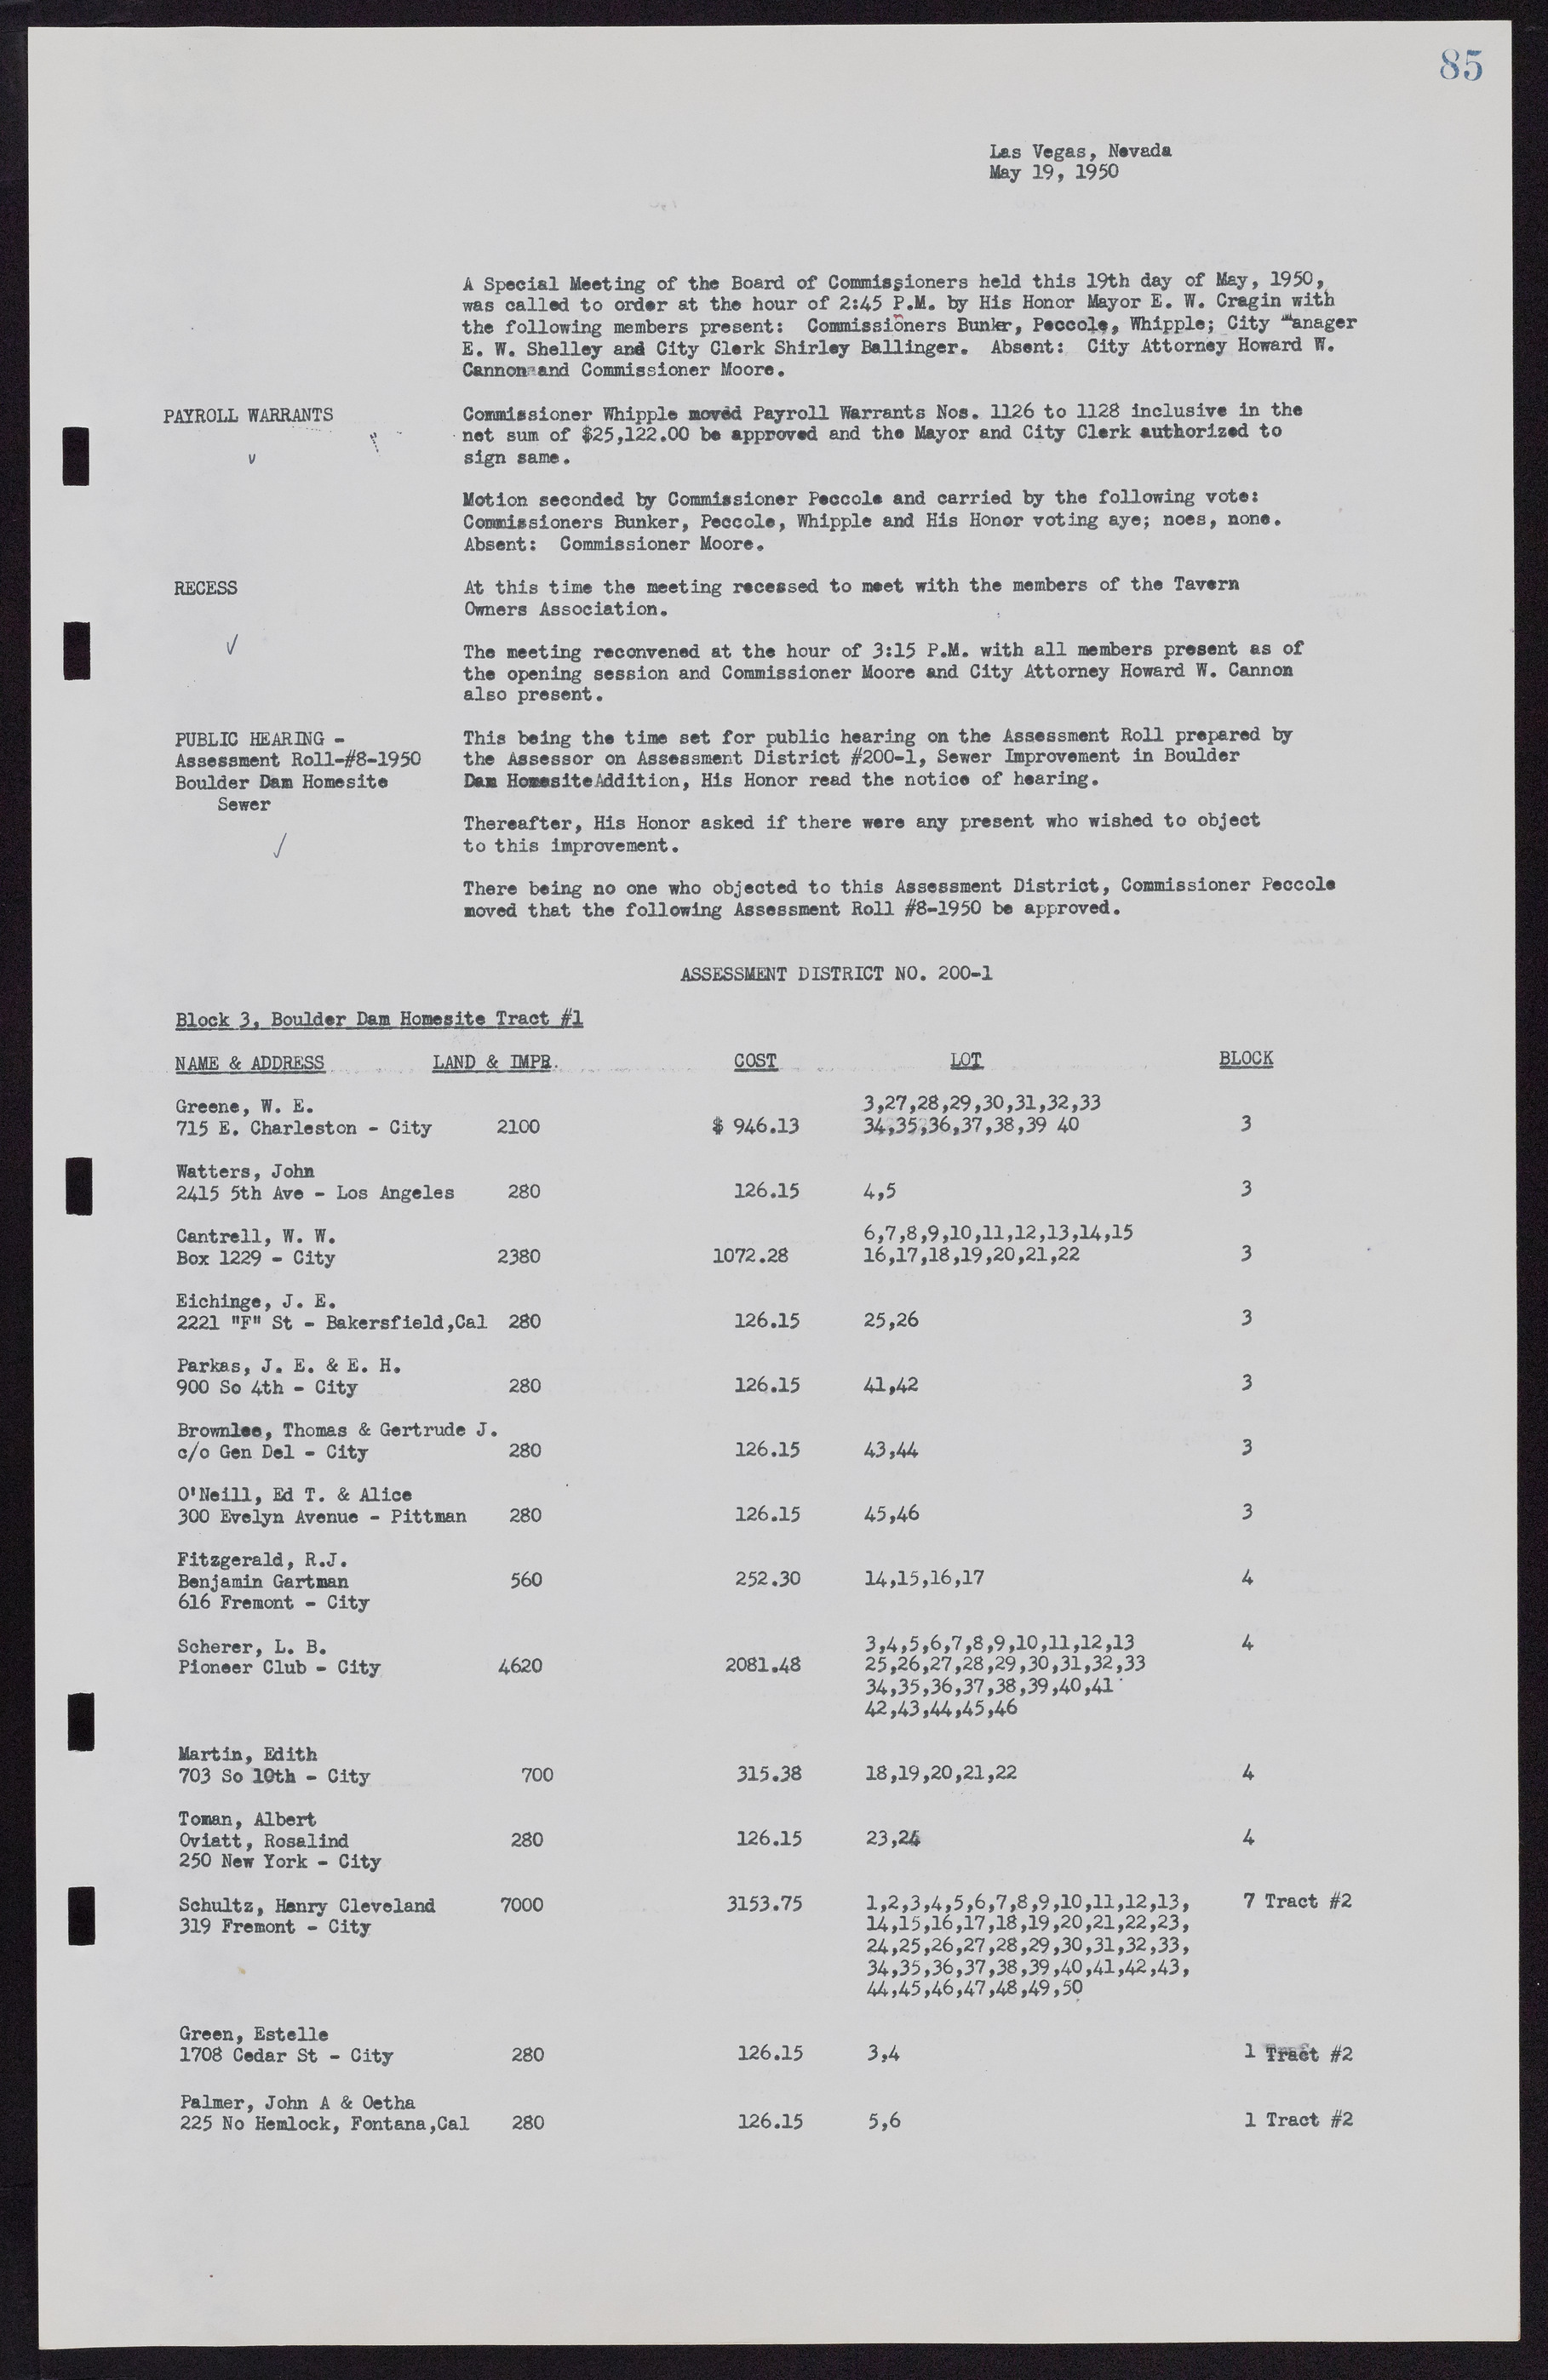 Las Vegas City Commission Minutes, November 7, 1949 to May 21, 1952, lvc000007-93